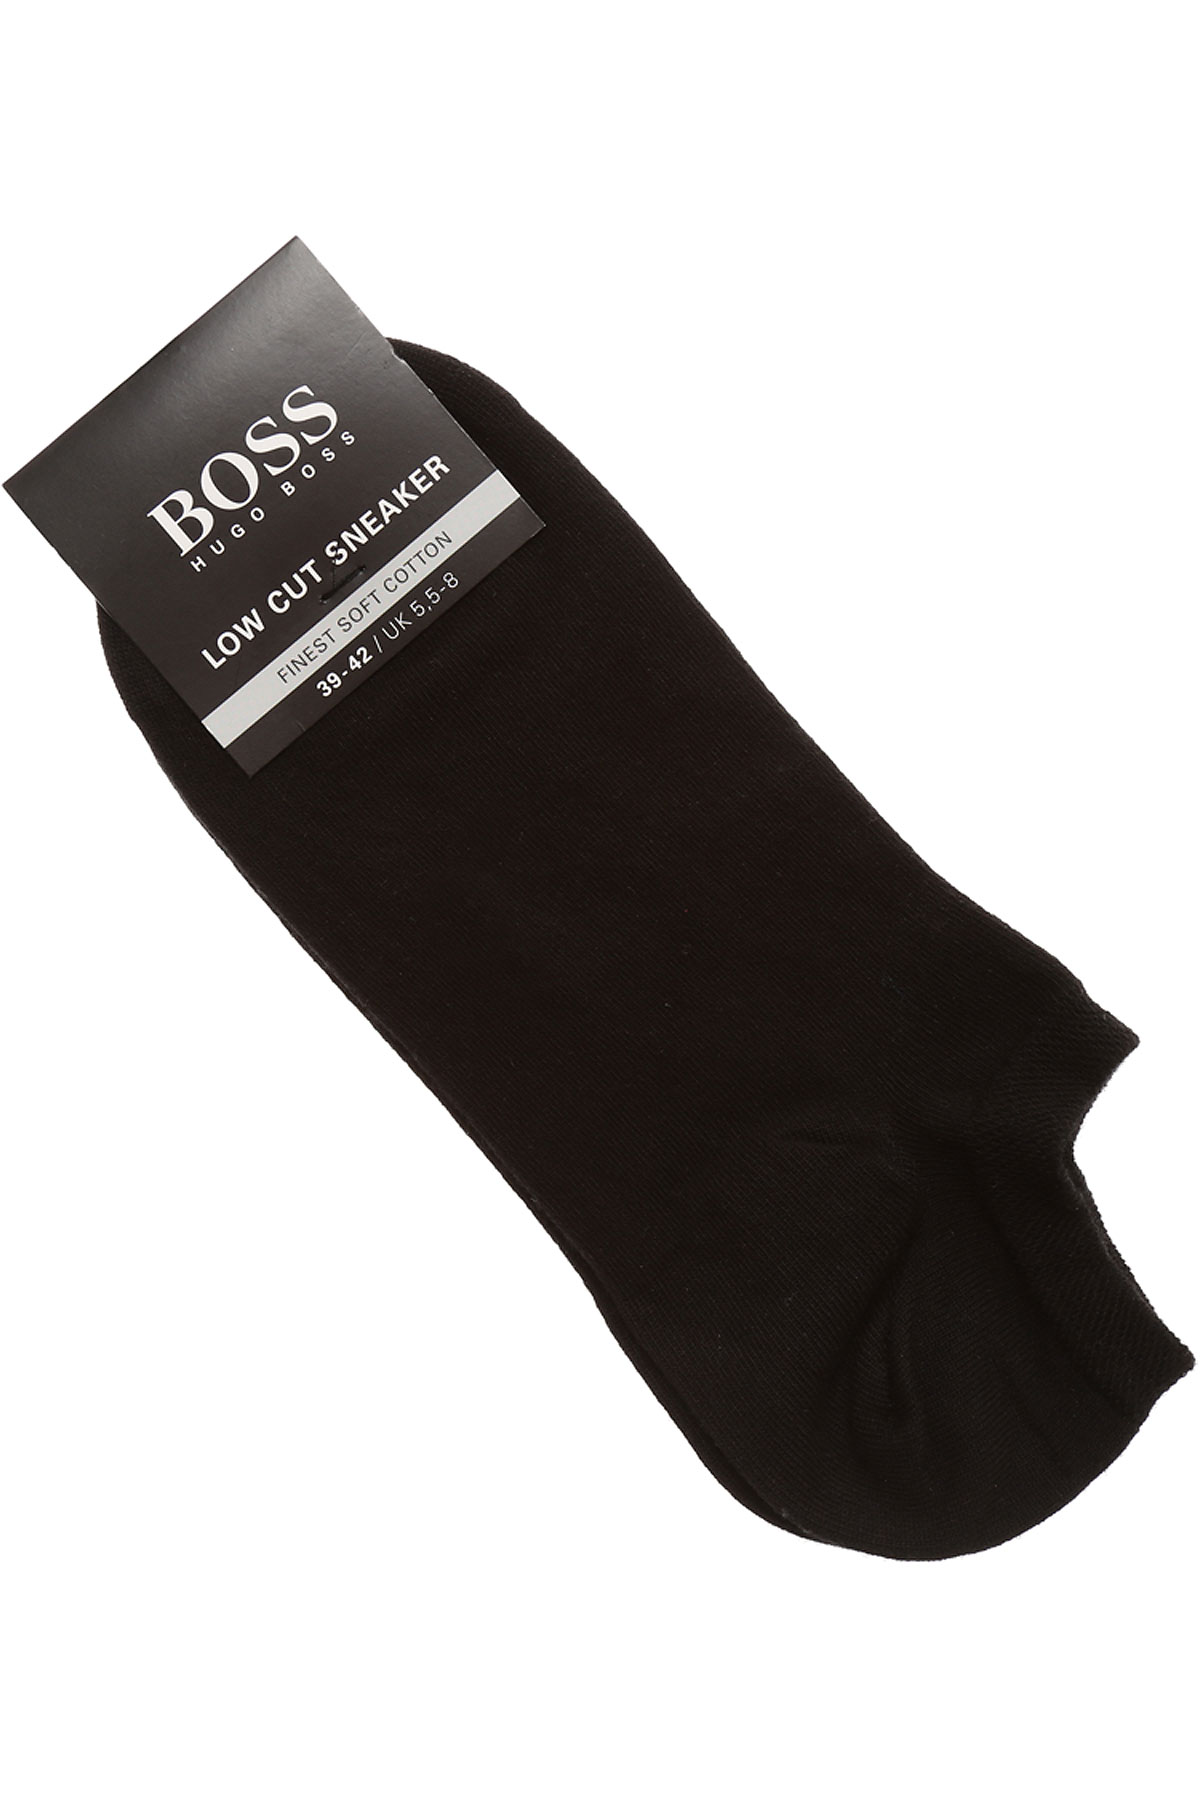 Mens Underwear Hugo Boss Socks, Style code: 50272578-10174252-001